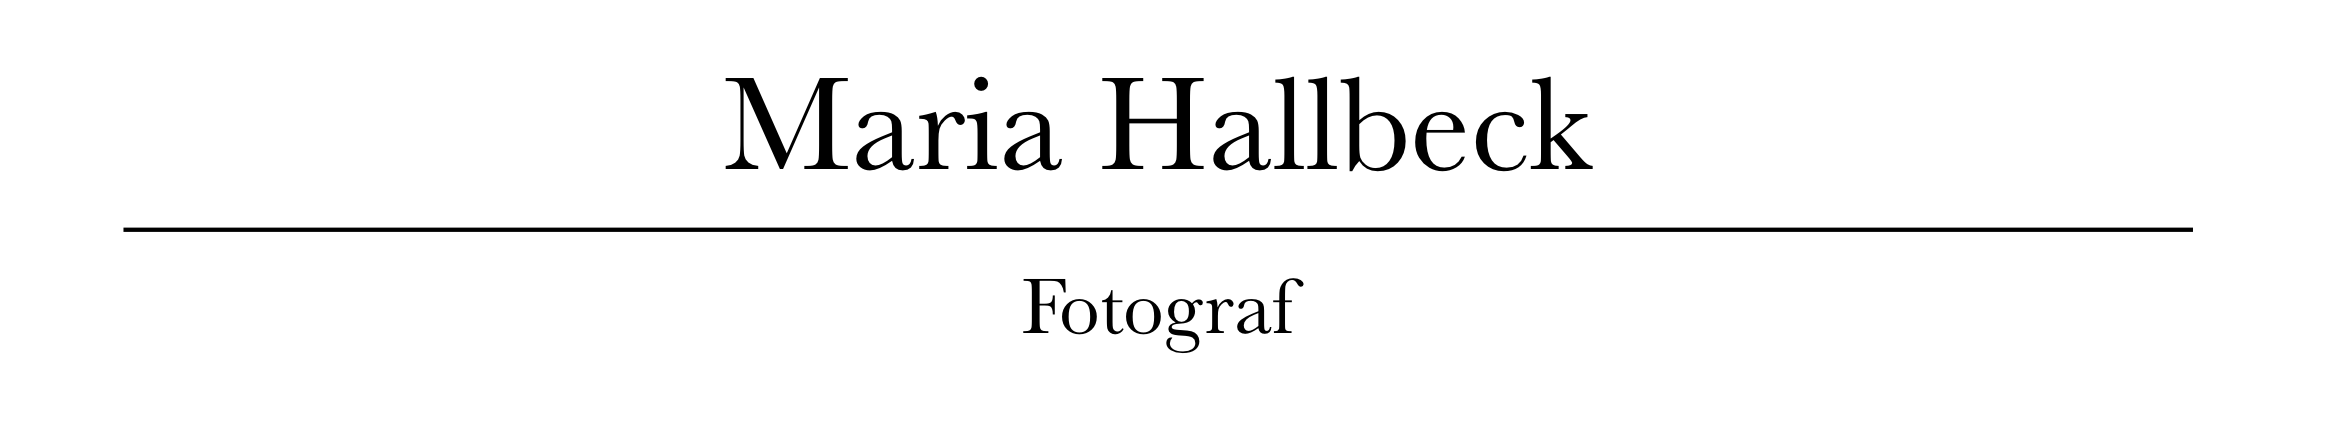 Maria Hallbeck